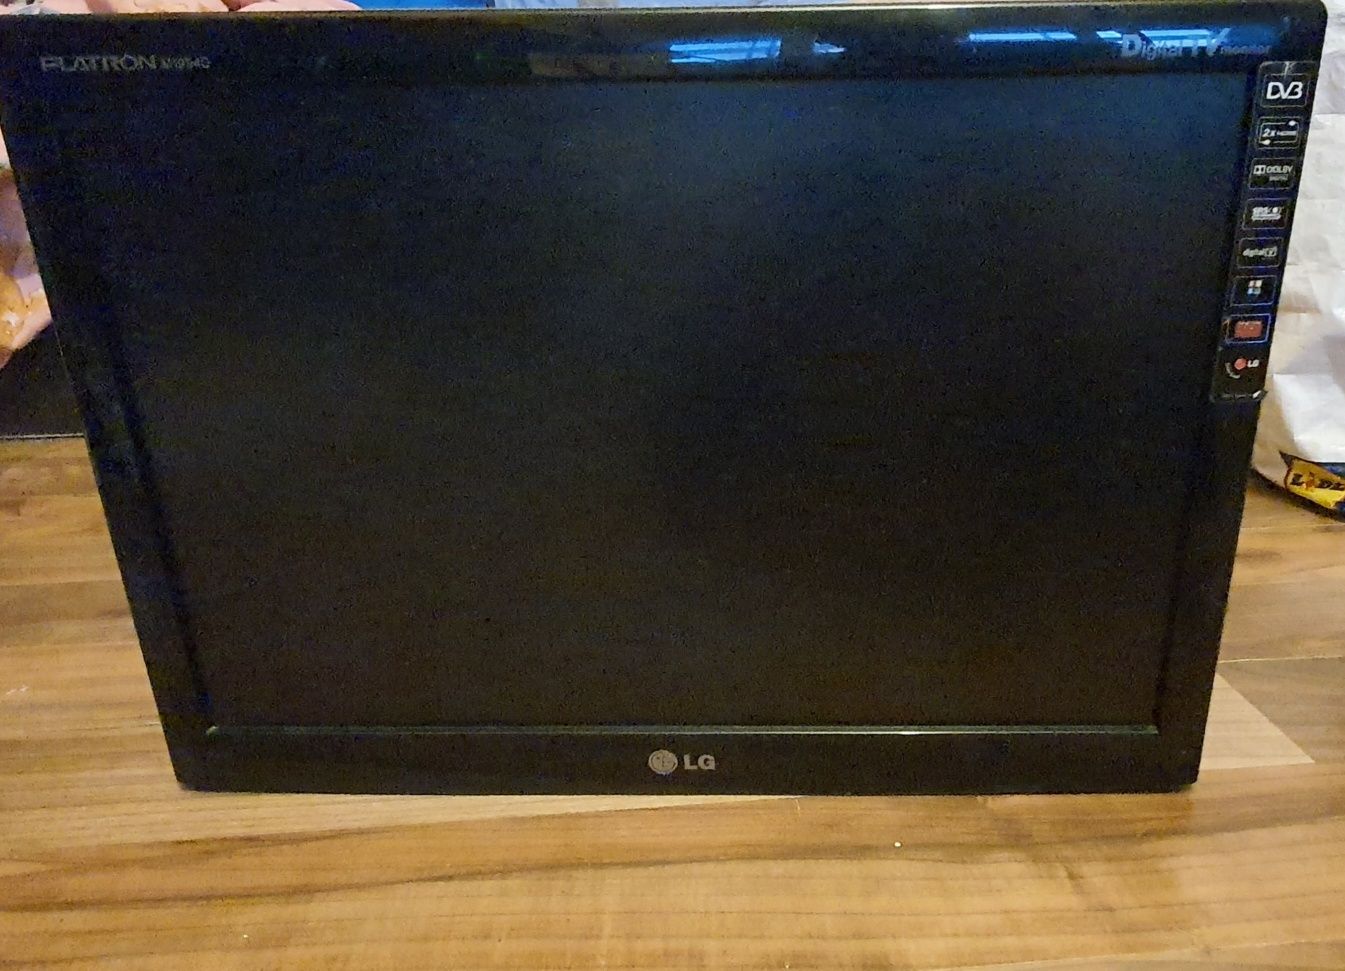 LG Flatron digital TV monitor